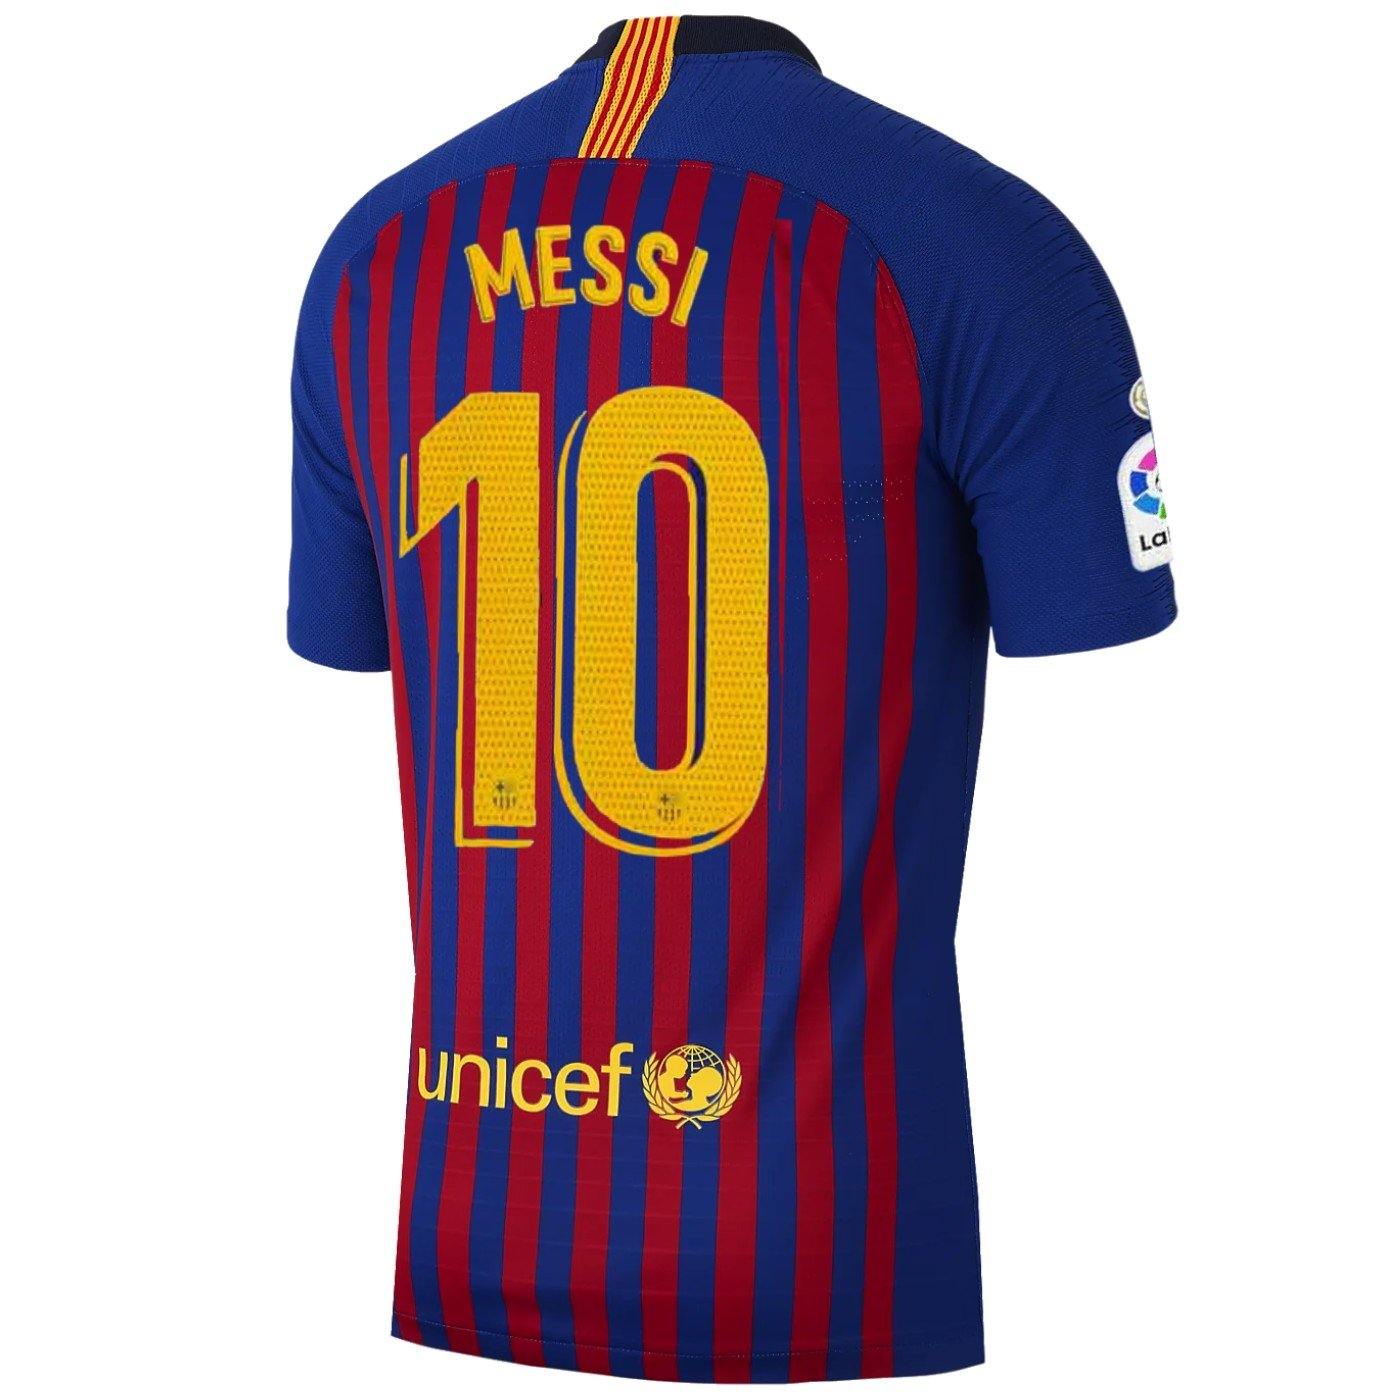 barcelona jersey 2018